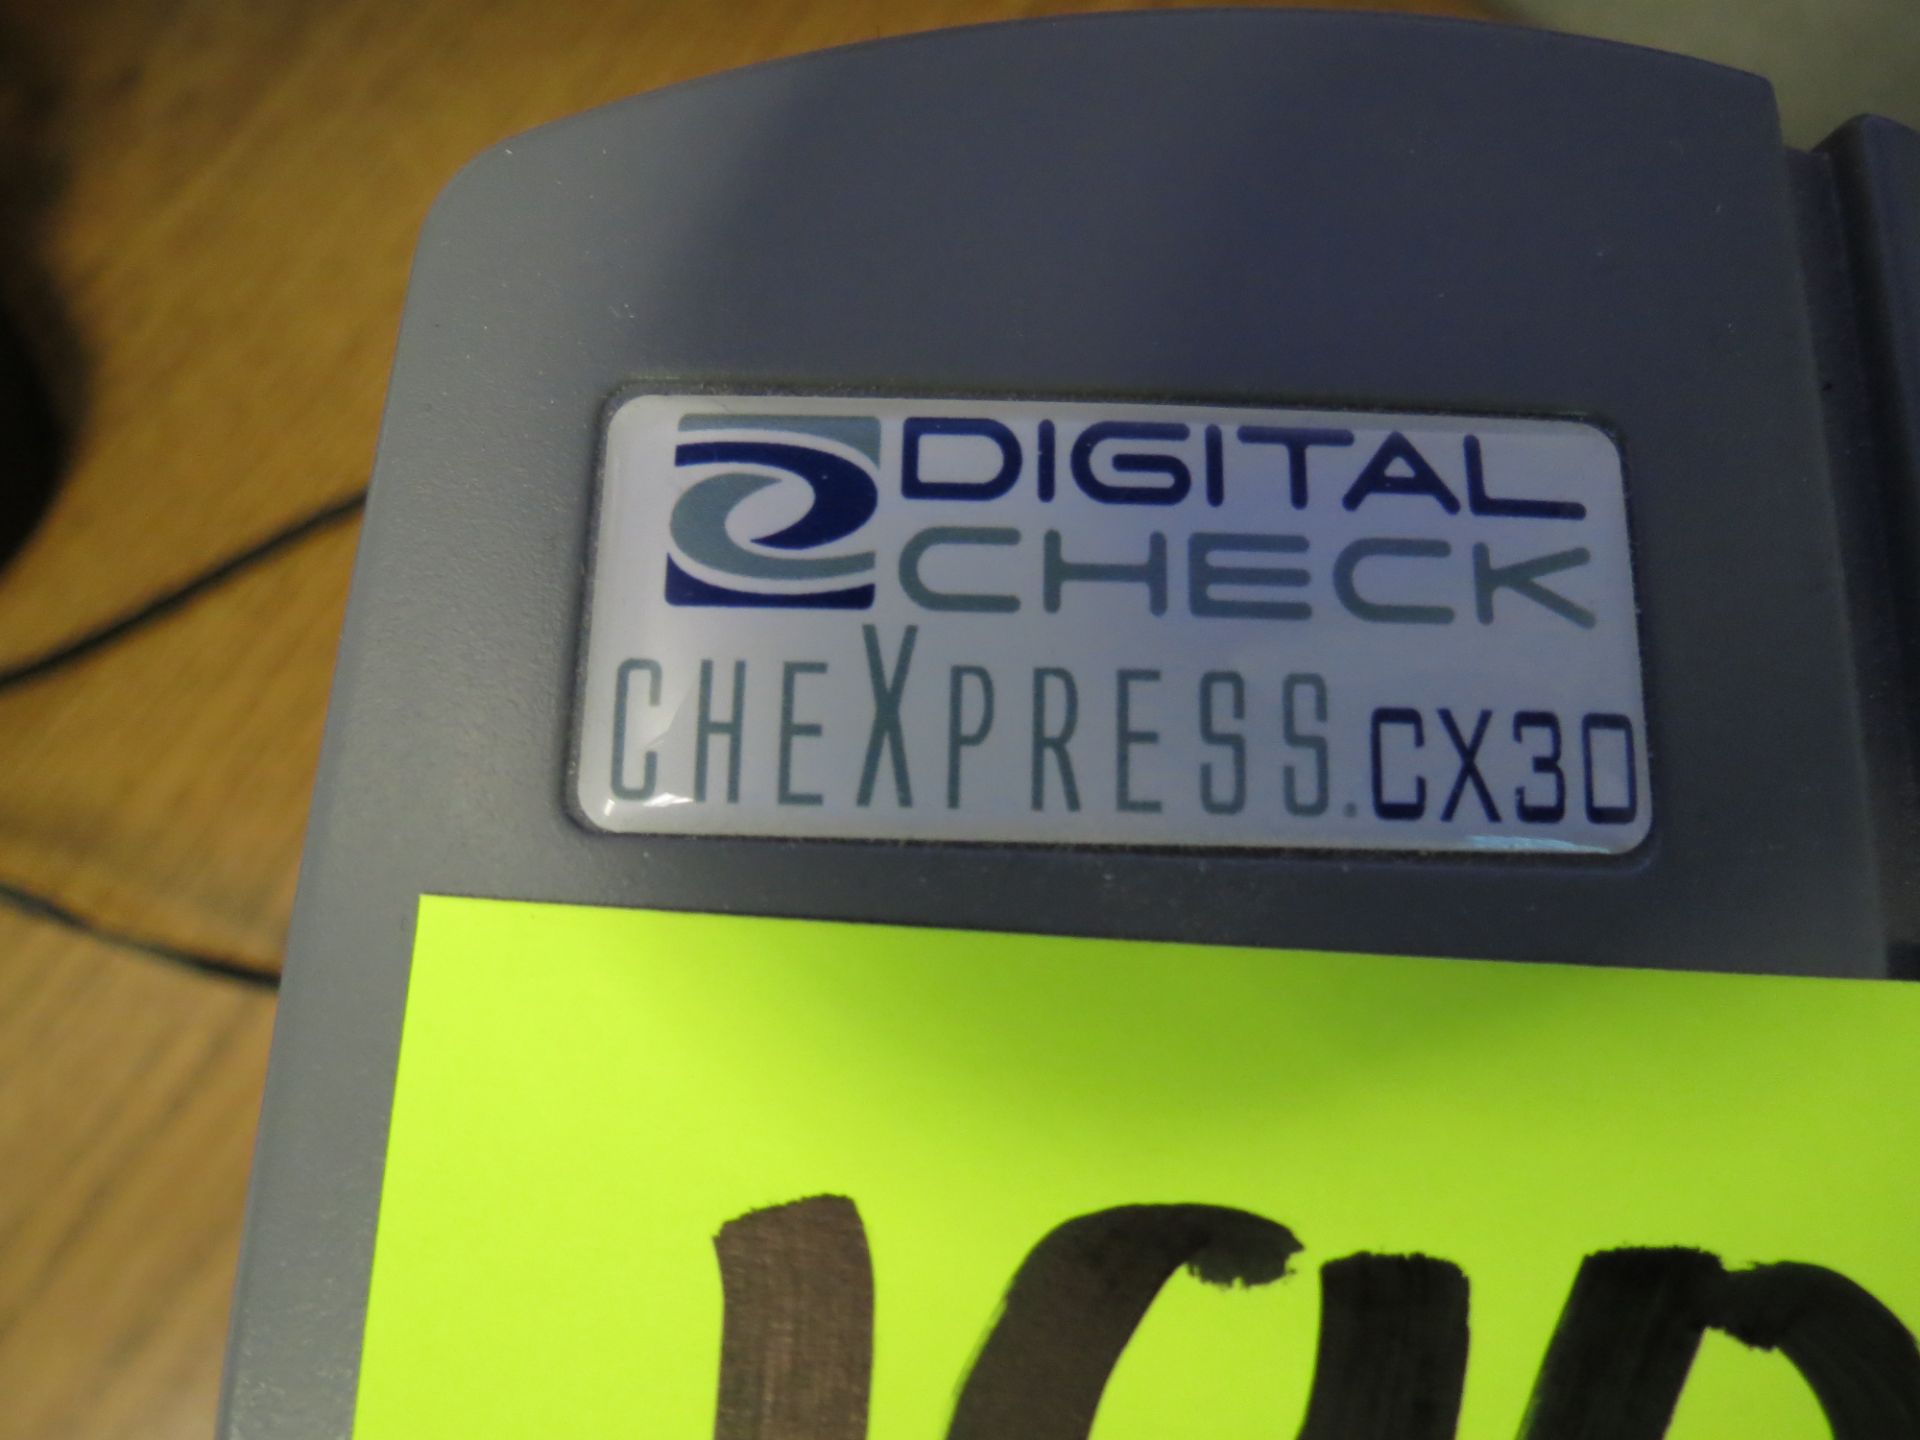 Digital Check CheXpress.CX30 - Image 2 of 2